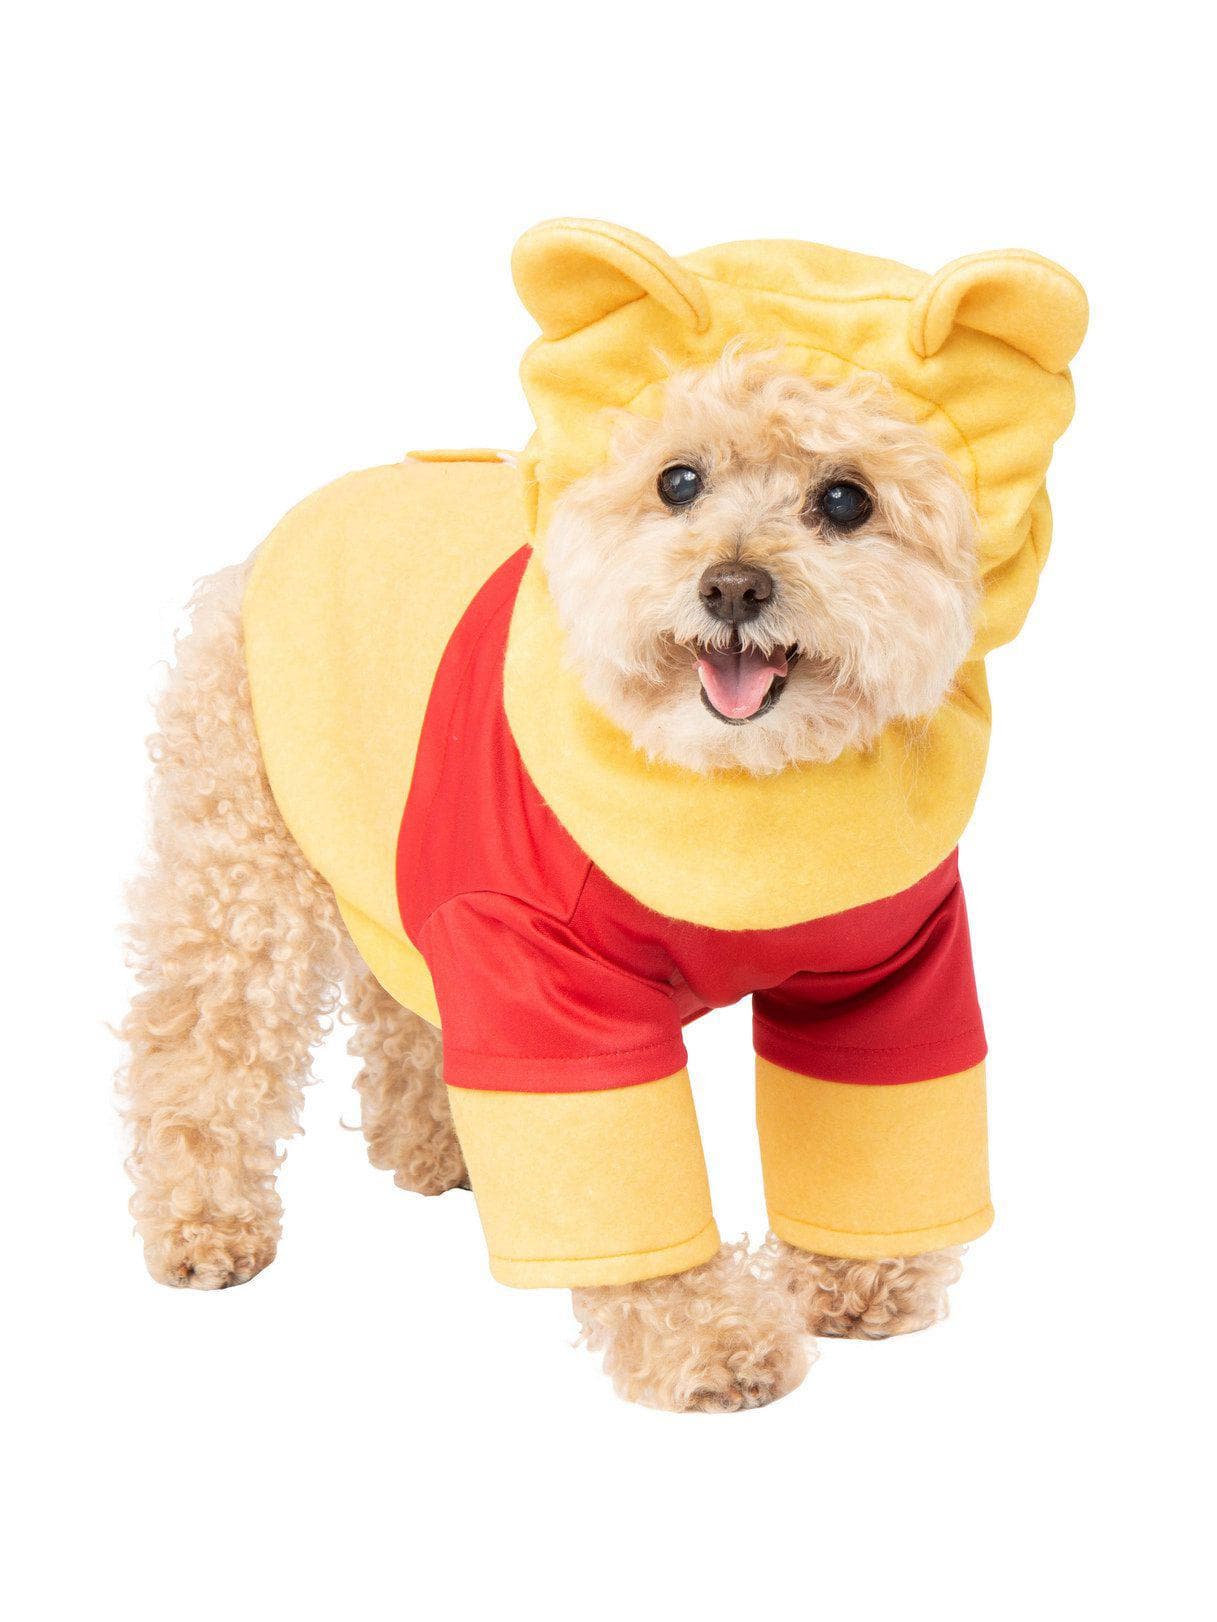 Winnie the Pooh Pet Costume - costumes.com